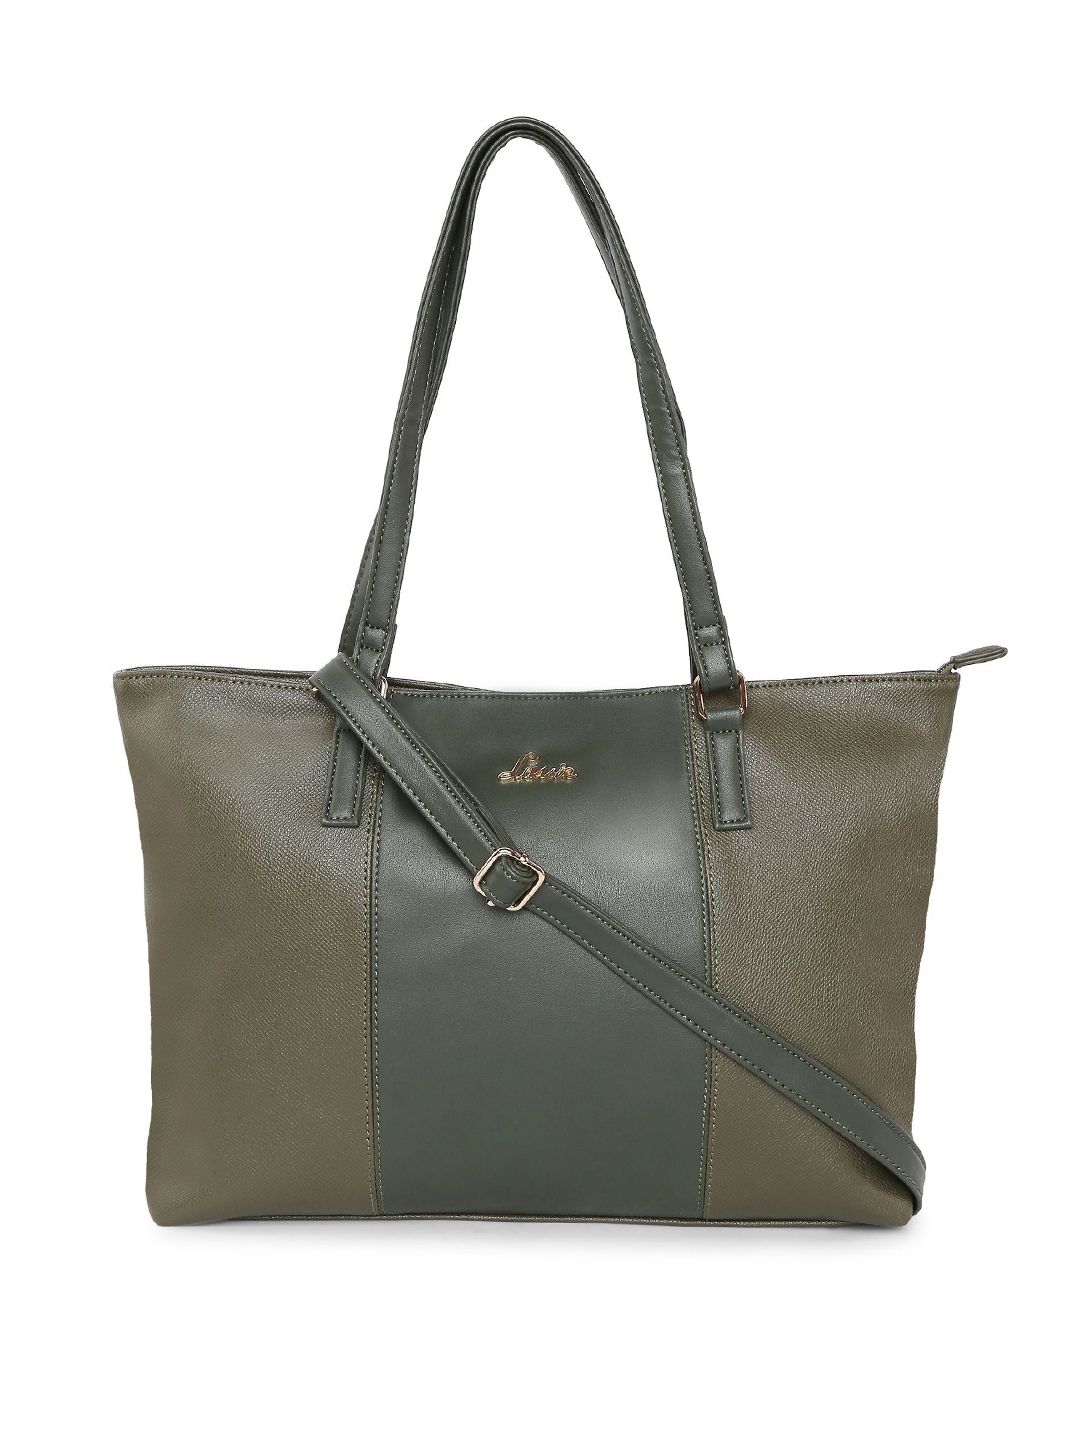 Lavie Olive Green Textured Shoulder Bag Price in India